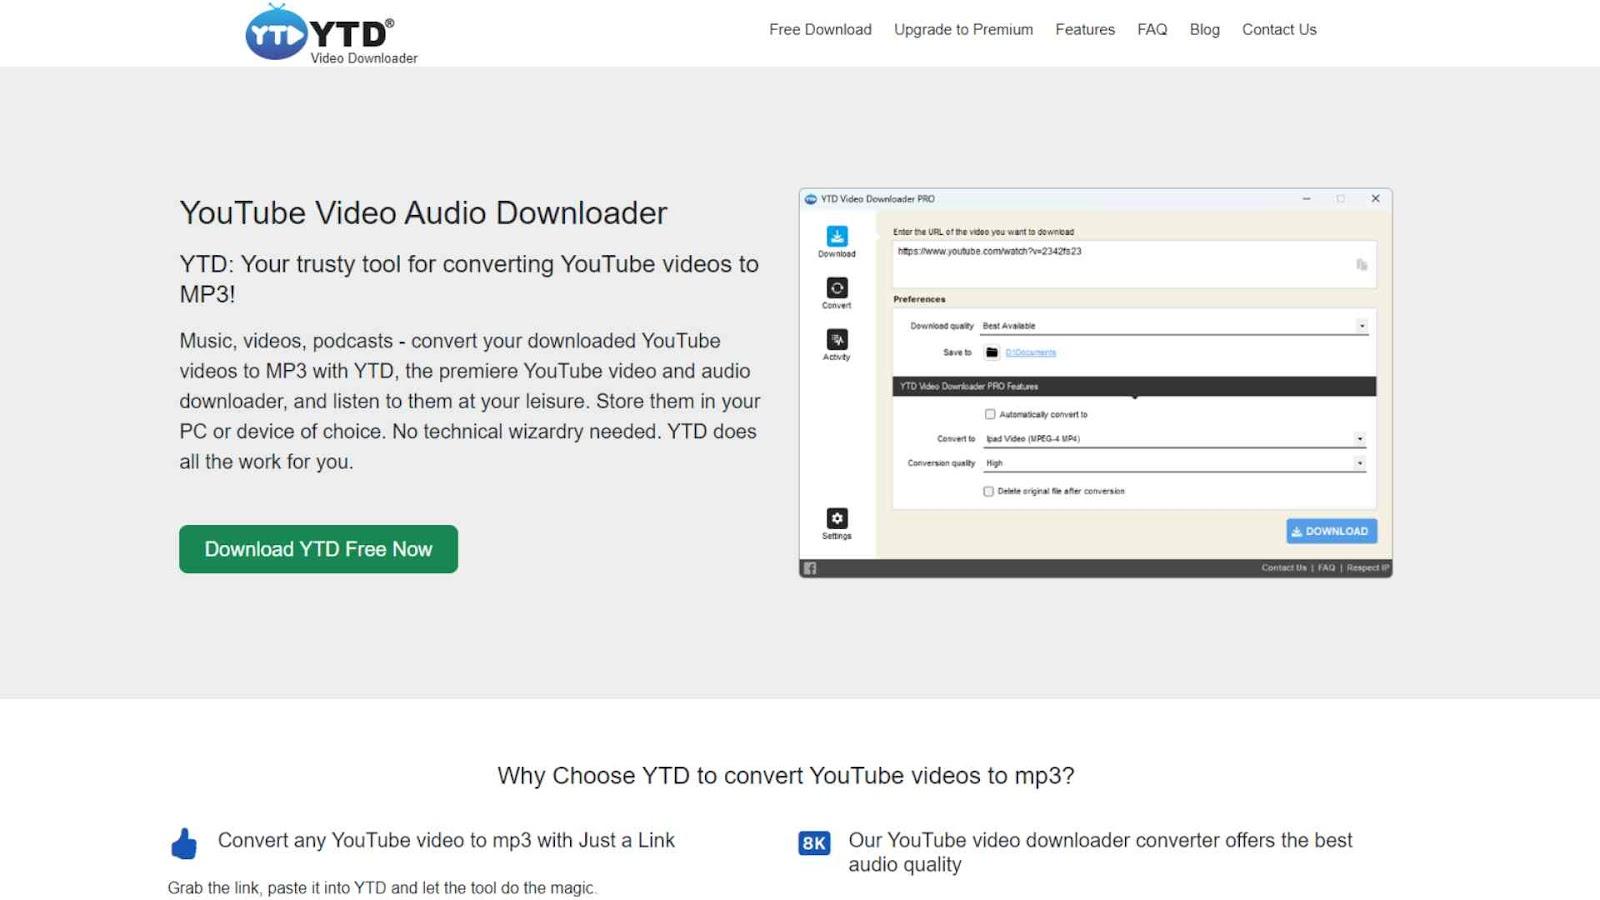 YTD YouTube Video Audio Downloader